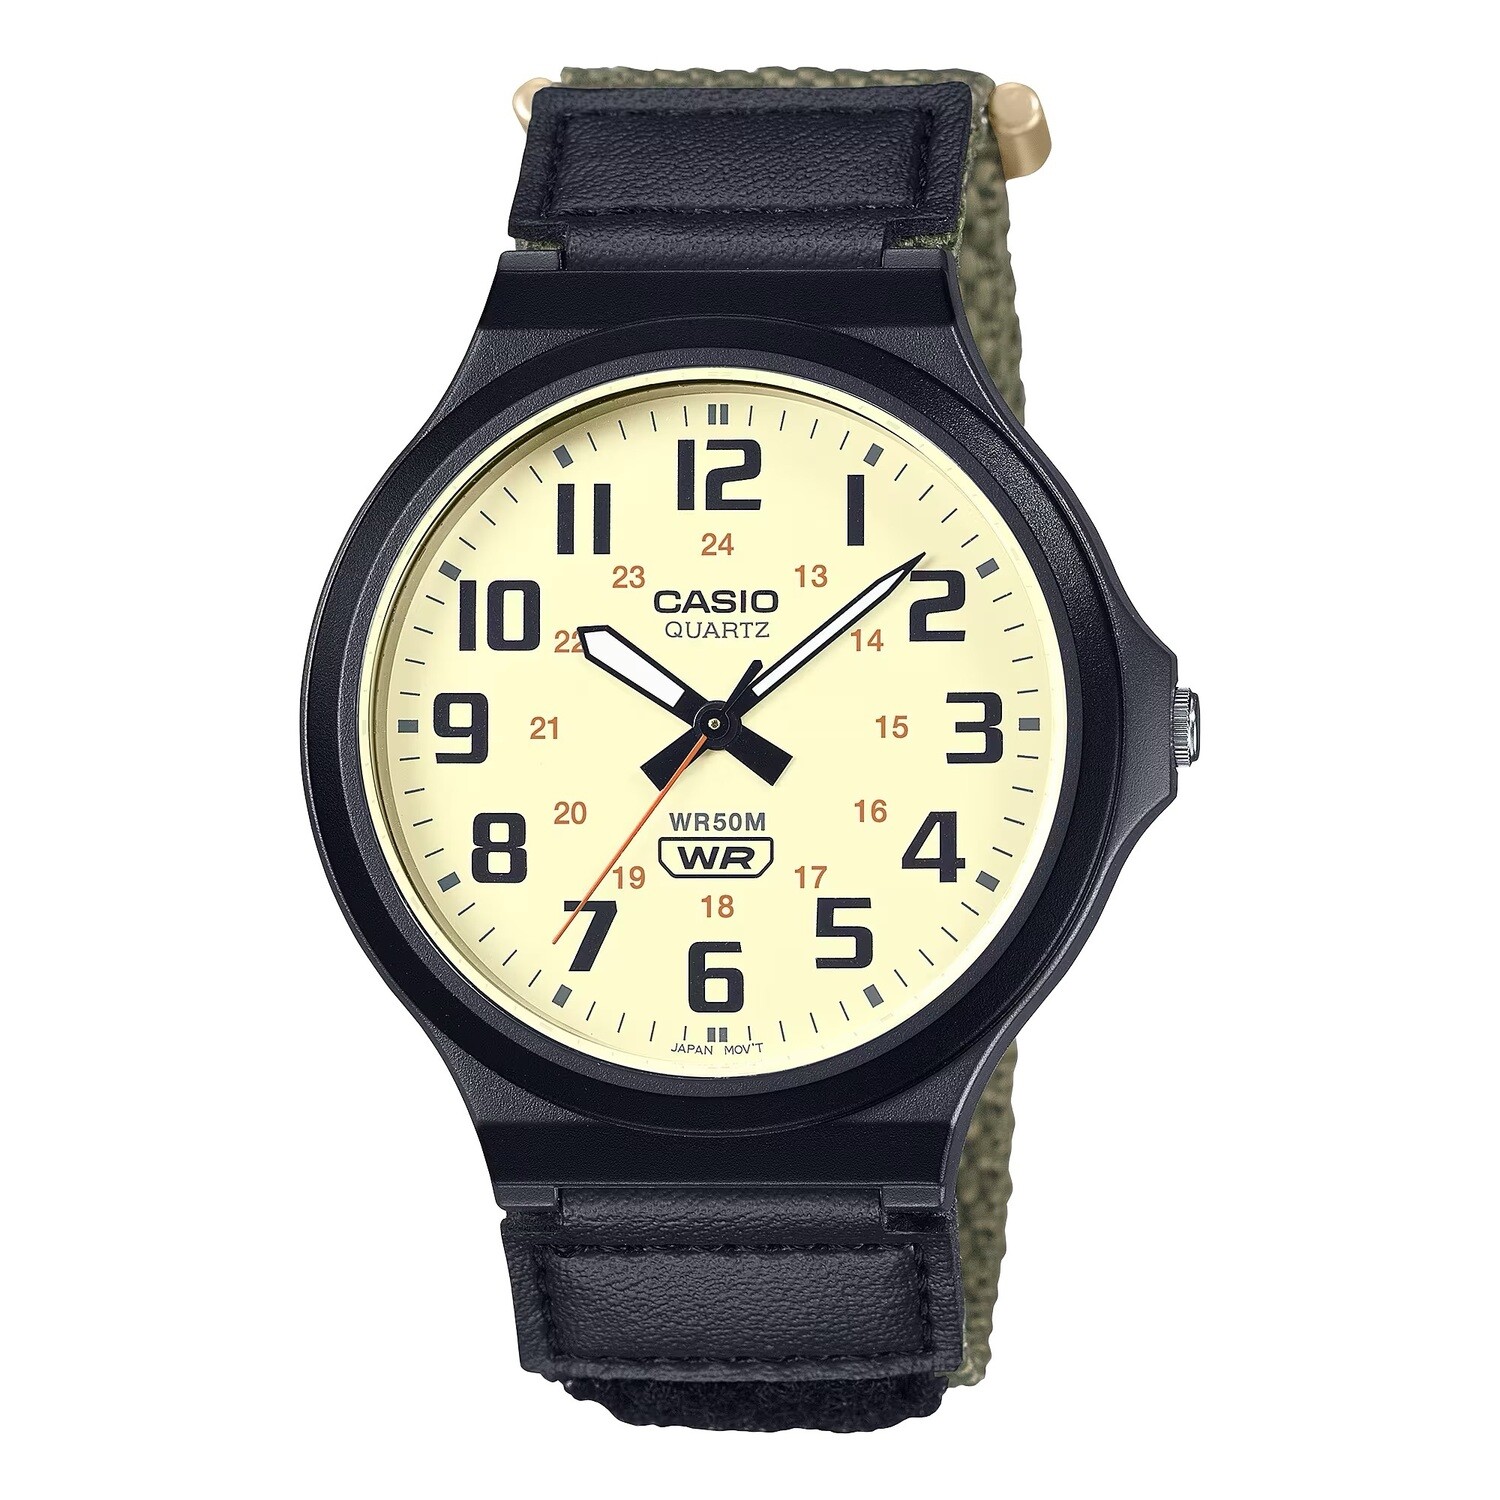 Casio MW-240B-3BV 43.6mm 50m WR fabric strap military sport watch for men